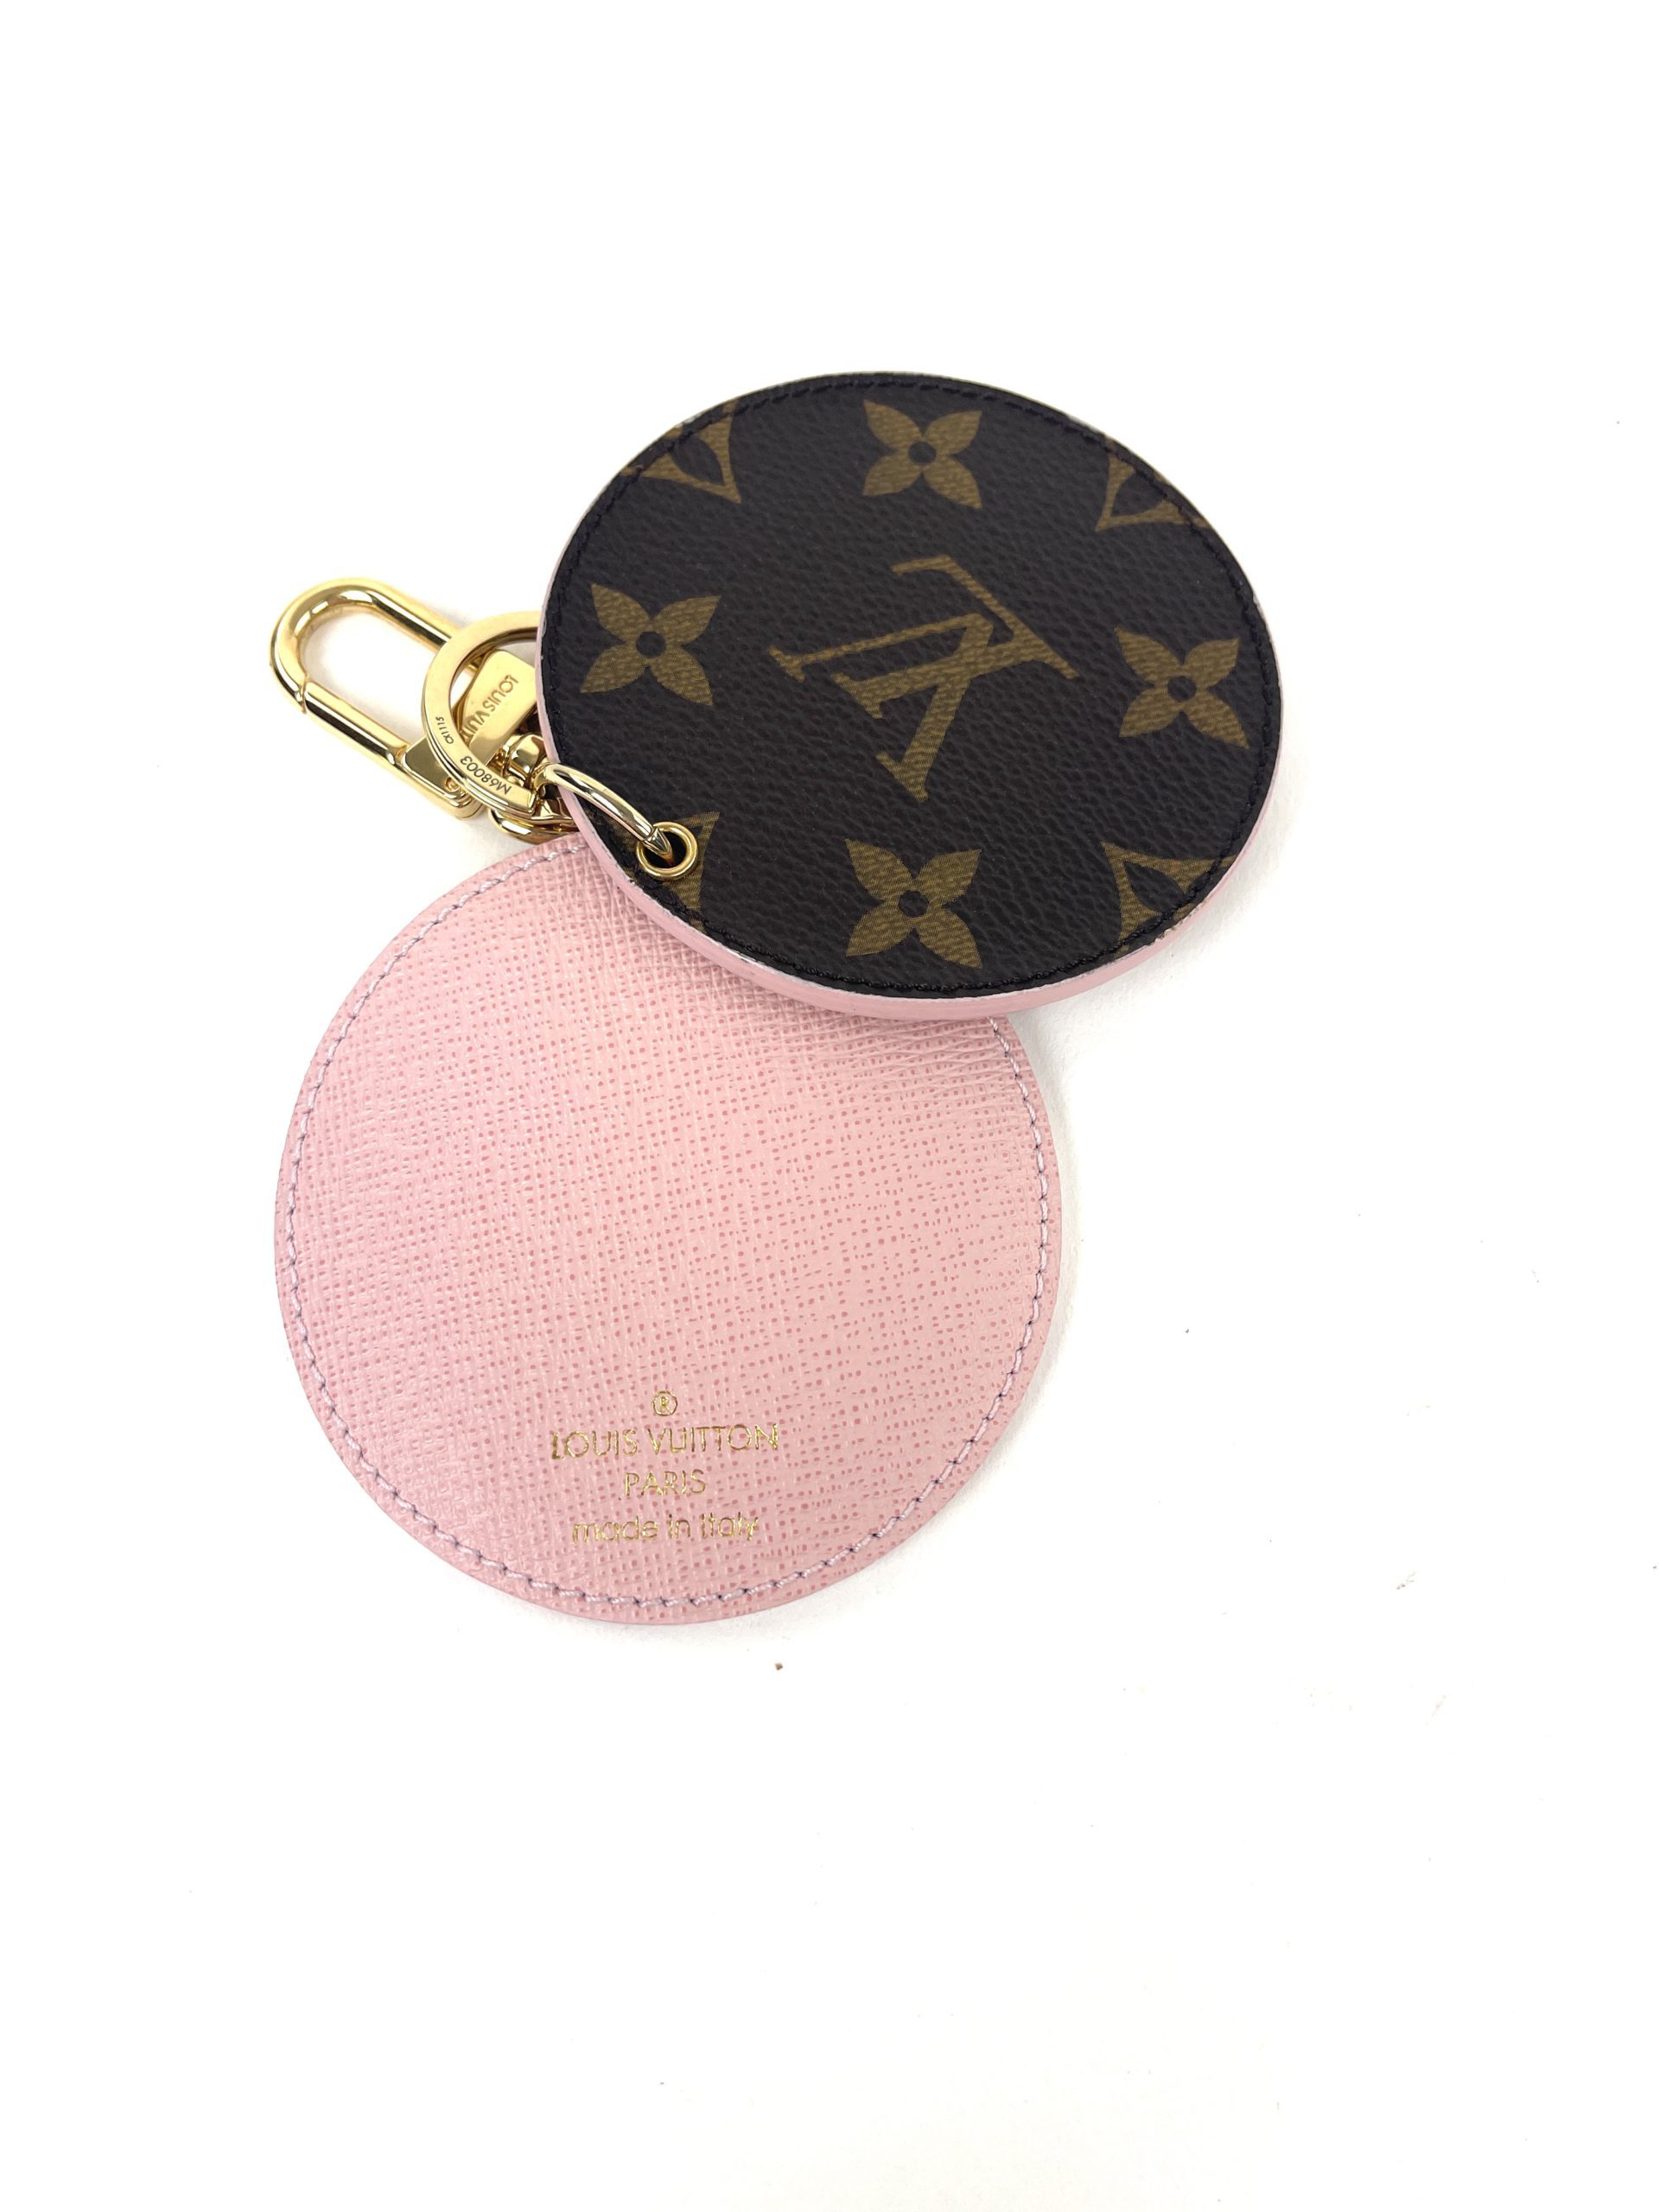 LOUIS VUITTON Monogram LV Compact Mirror Bag Charm Keychain Round Light Pink